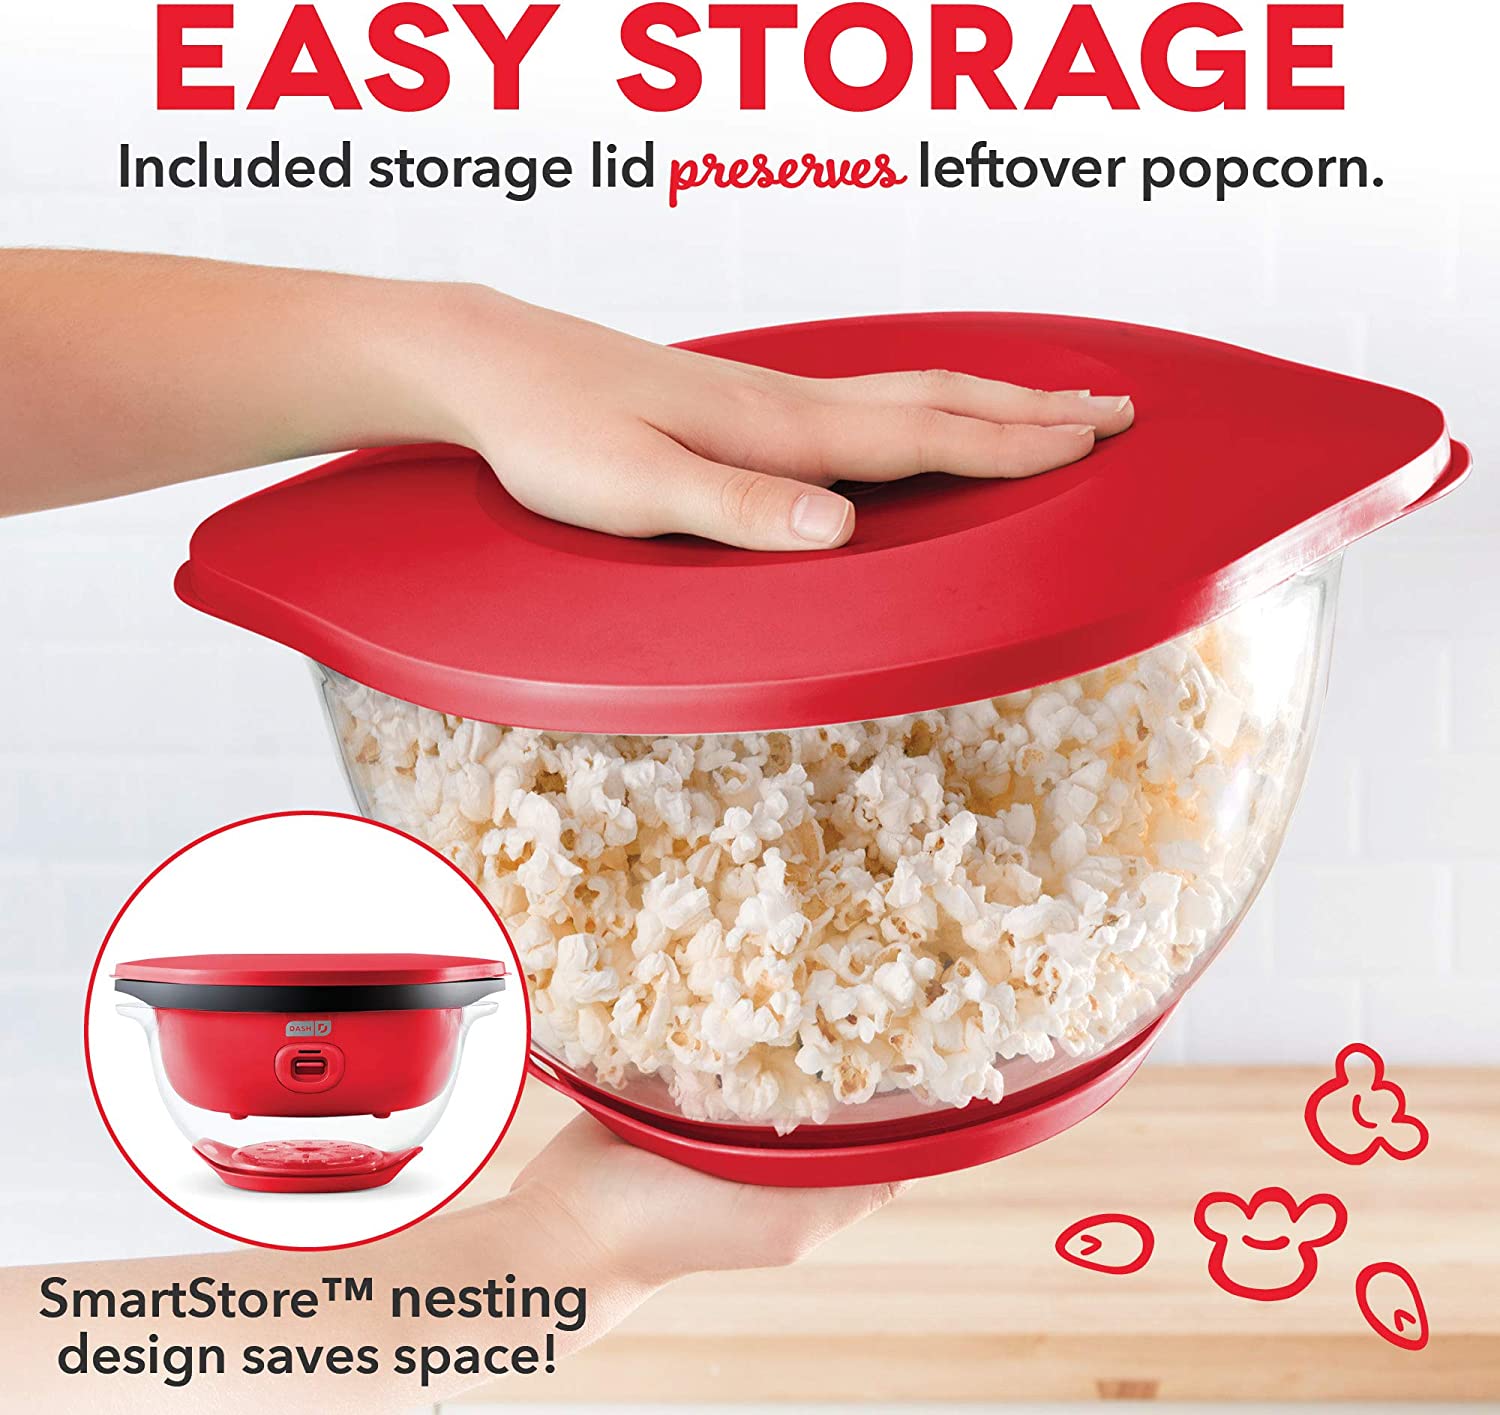 ITEM# 0111 DASH SmartStore™ Deluxe Stirring Popcorn Maker, Hot Oil